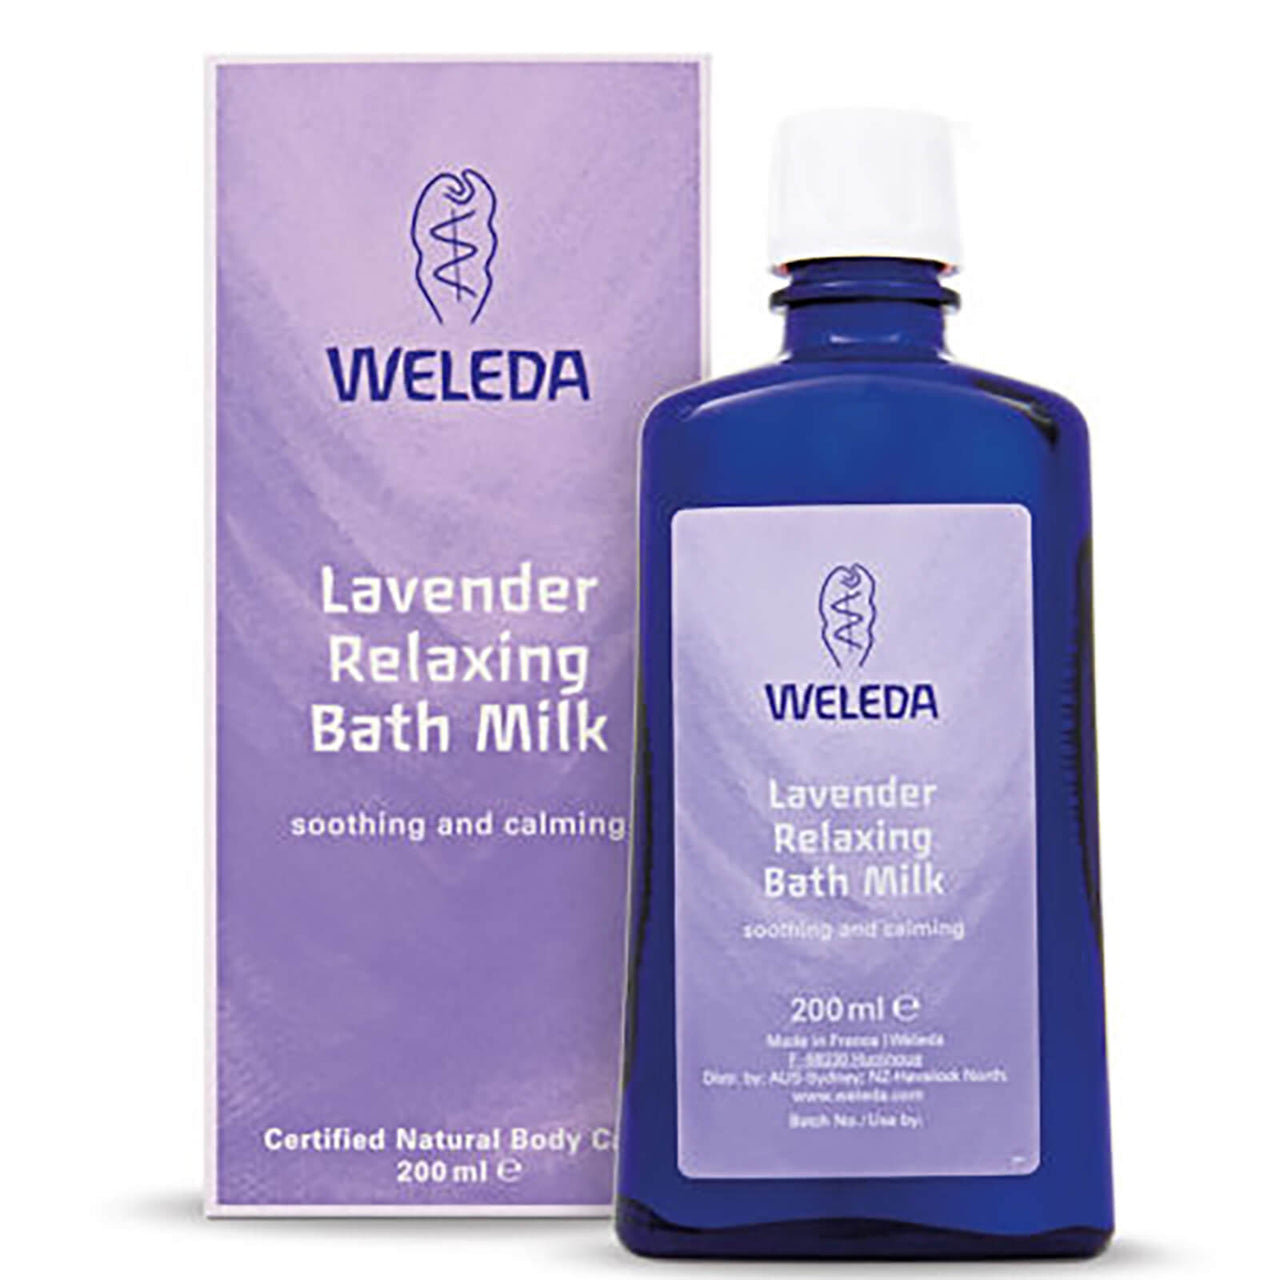 Weleda - Lavender Bath Milk - [200ml]